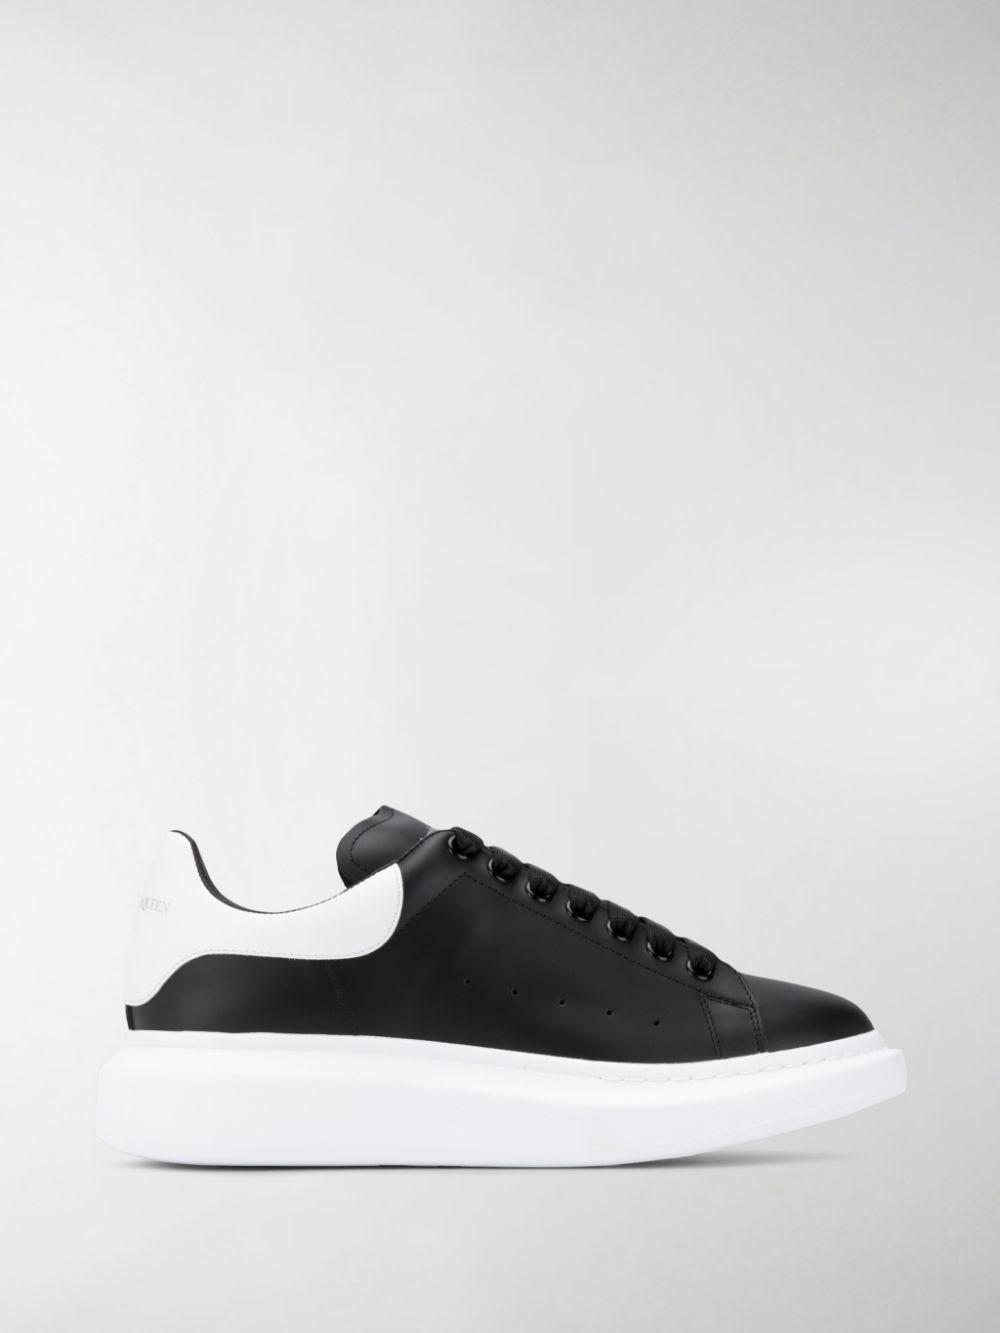 Alexander McQueen Sneakers Larry Shoes in White for Men | Lyst